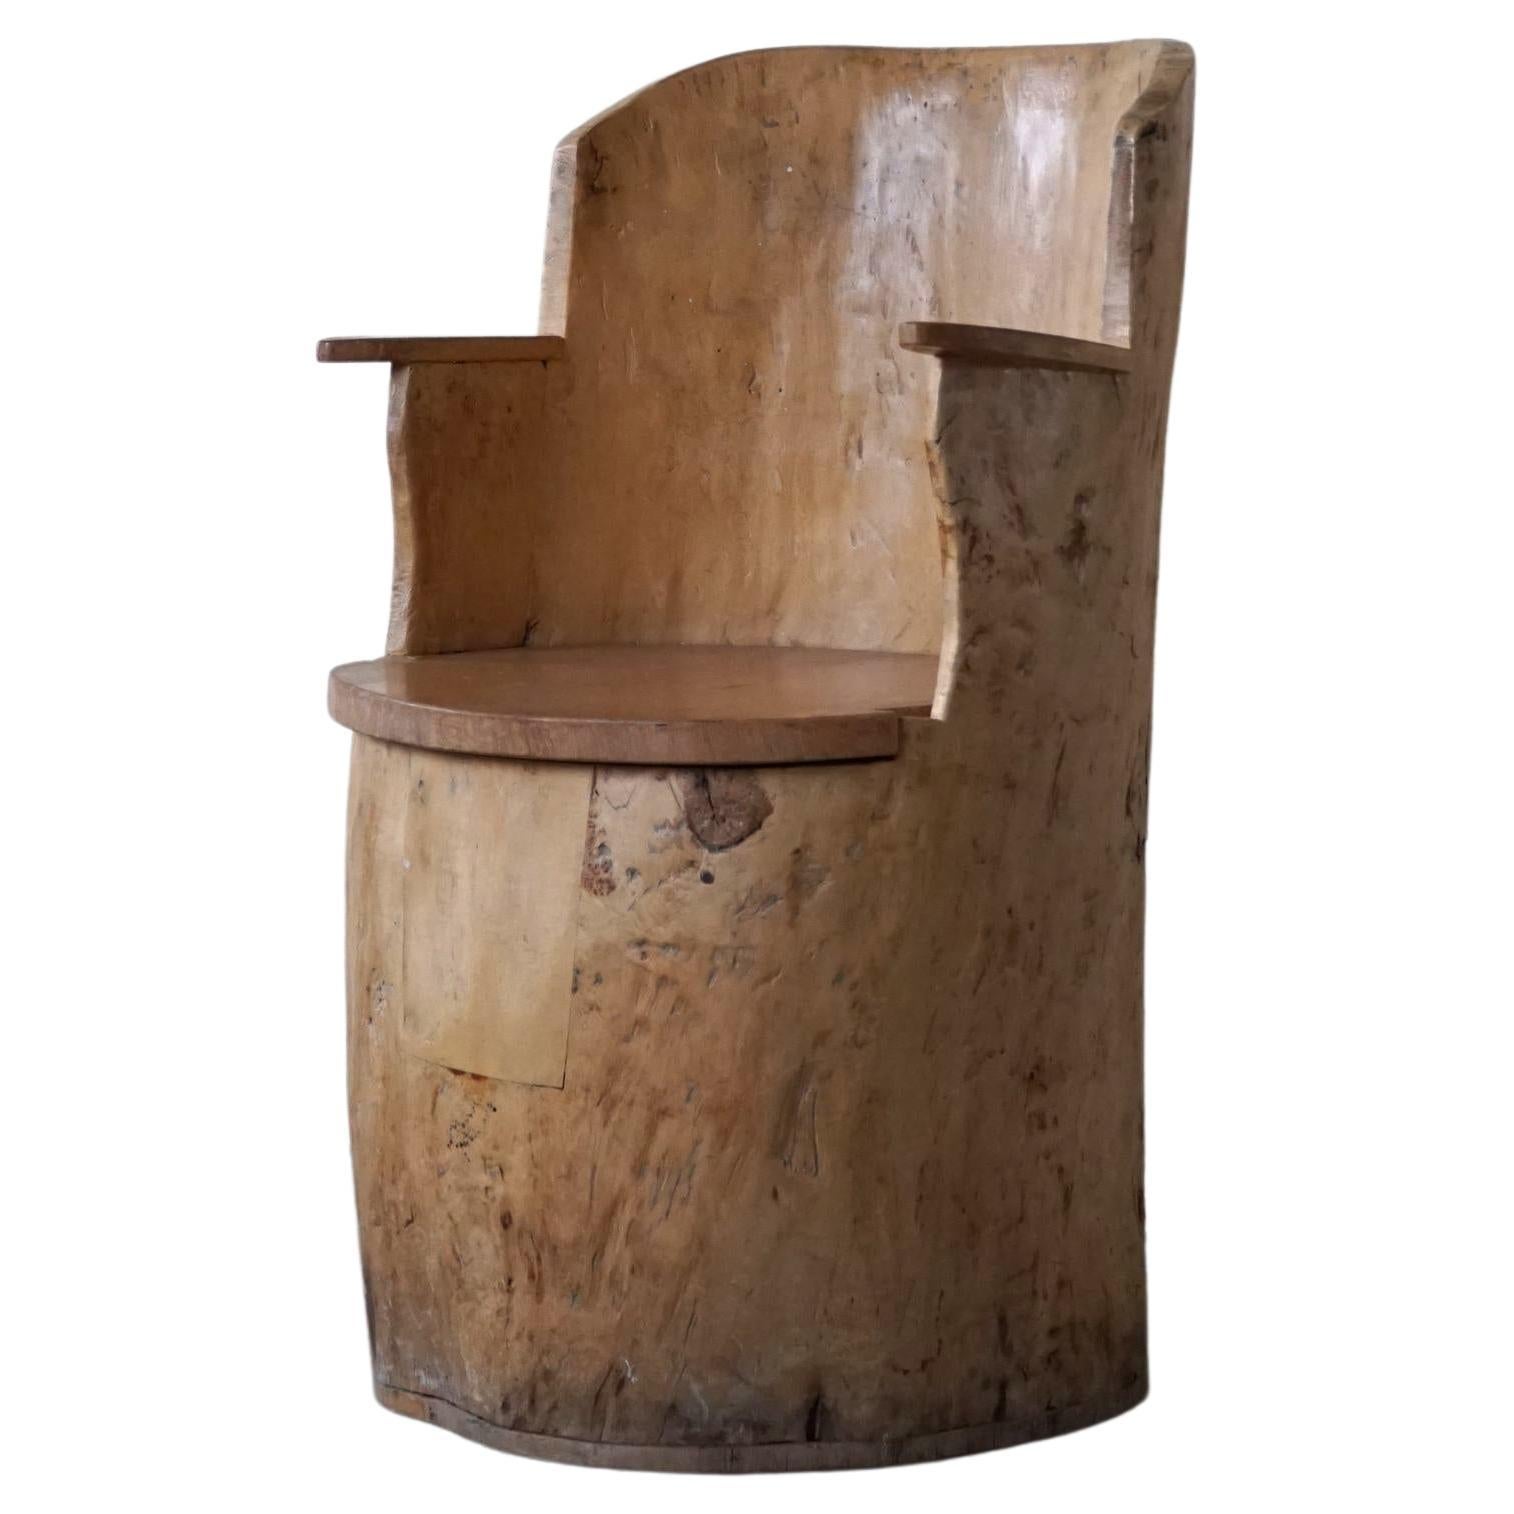 Wabi Sabi Stump Chair in Solid Birch, by a Swedish Cabinetmaker, Modern, 1950s For Sale